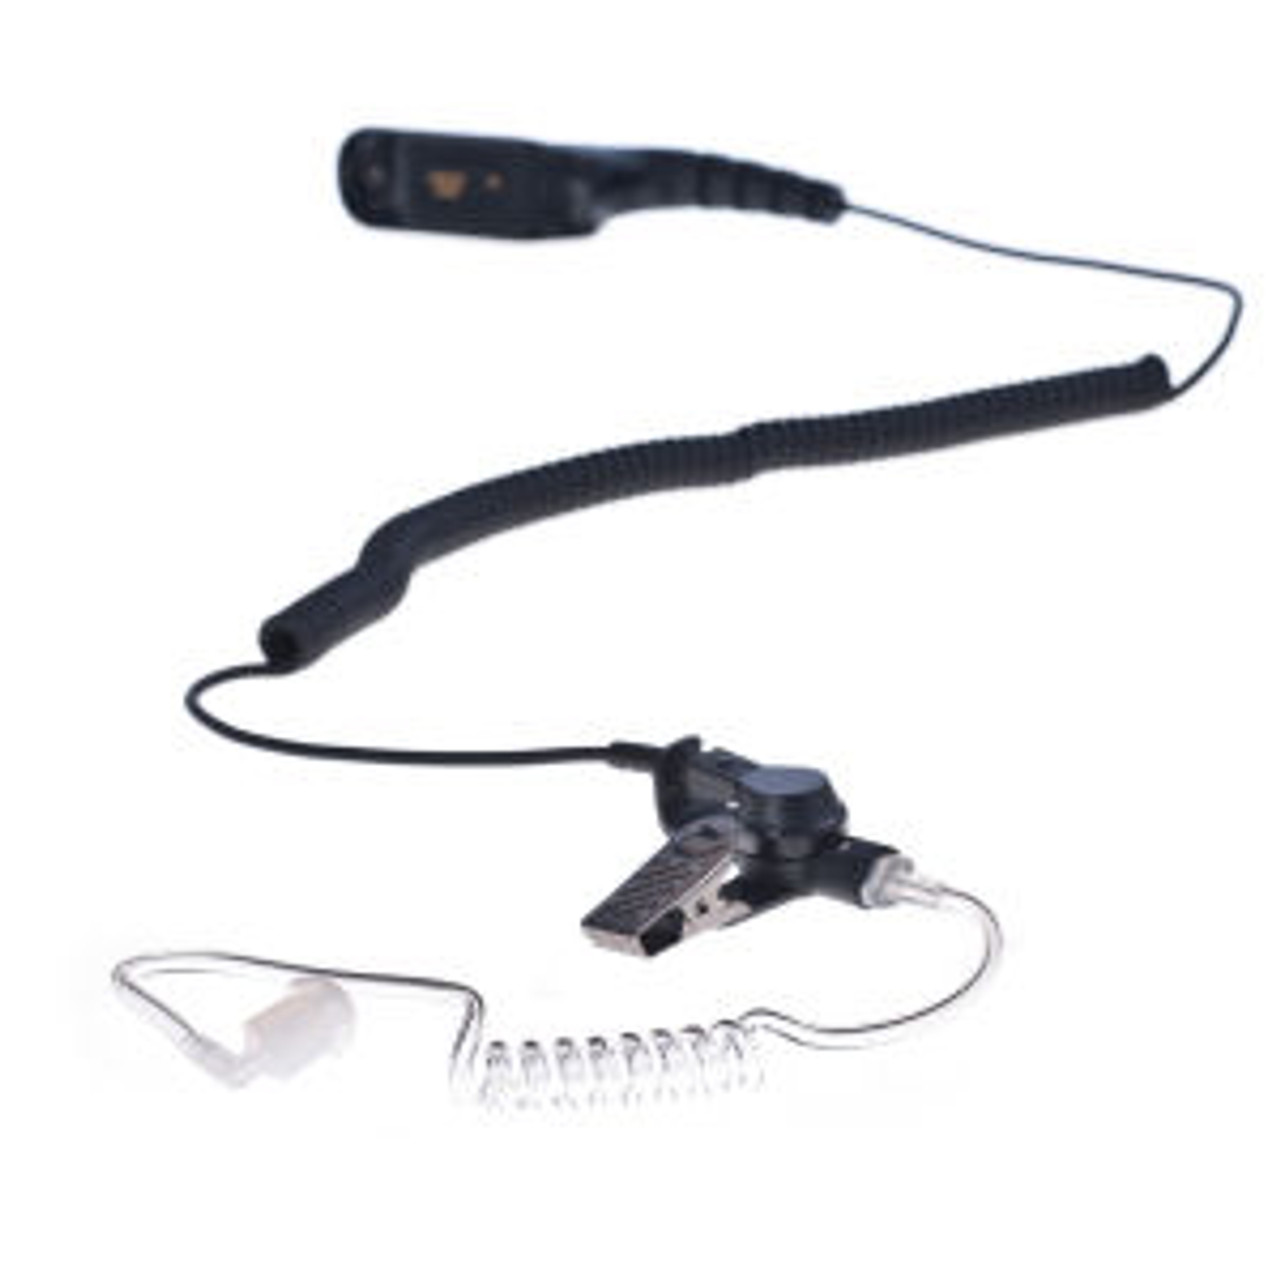 ICOM F4161 1-Wire Listen Only Kit